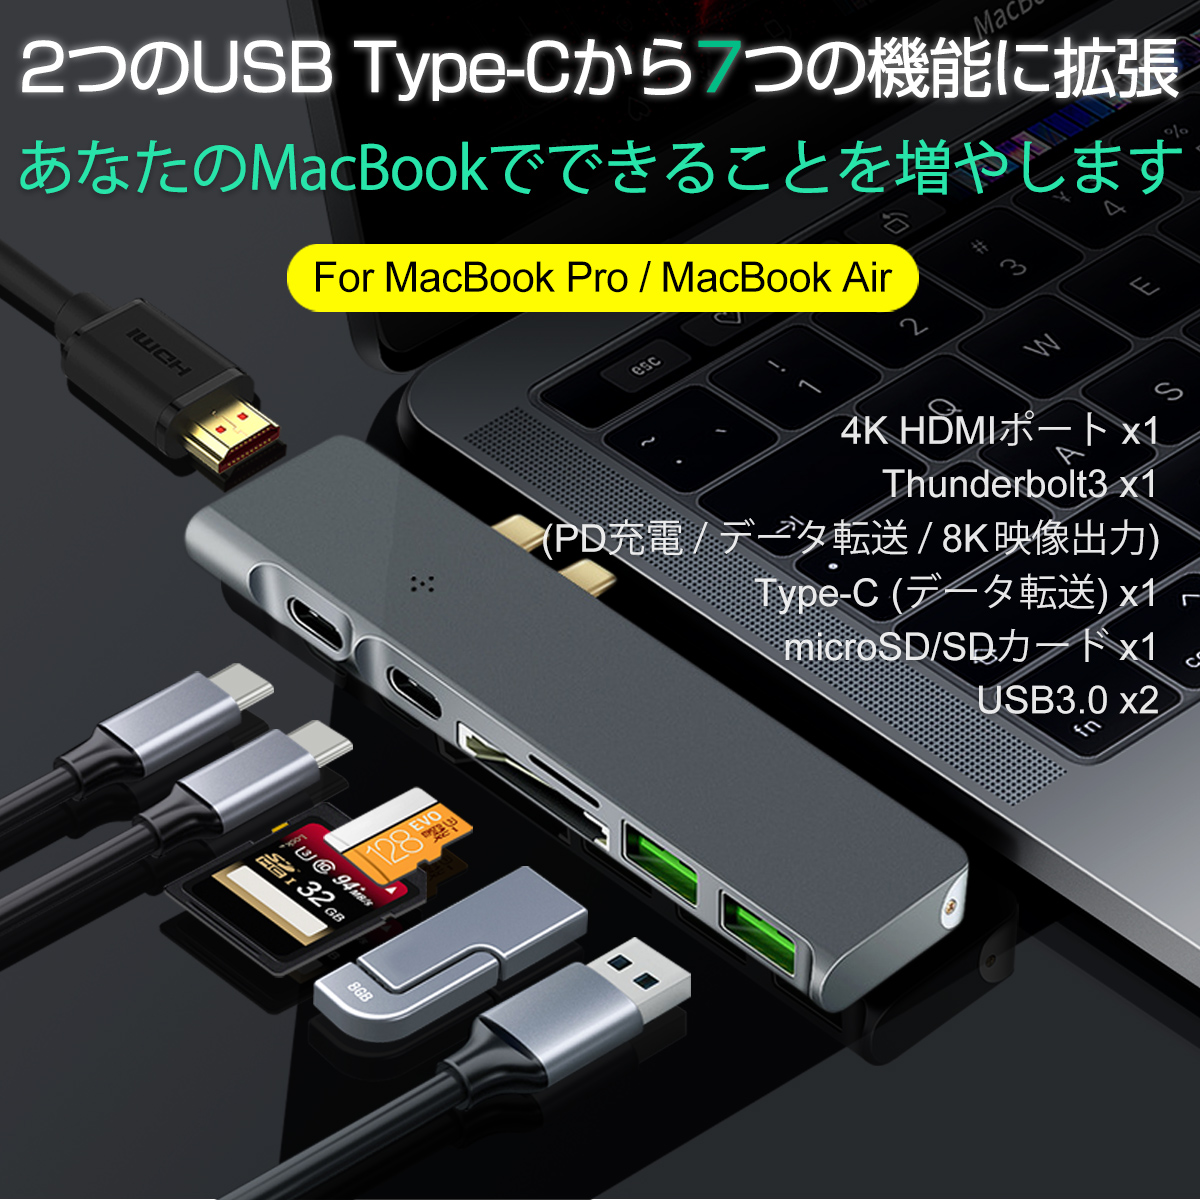 USB Type-C ハブ 7in1 USB3.0x2 4K 8K出力 HDMI Thunderbolt3 40Gbps PD充電 microSD SDスロット 拡張 変換 スペースグレイ MacBookに馴染むデザイン設計 SDM便送料無料 3ヶ月保証